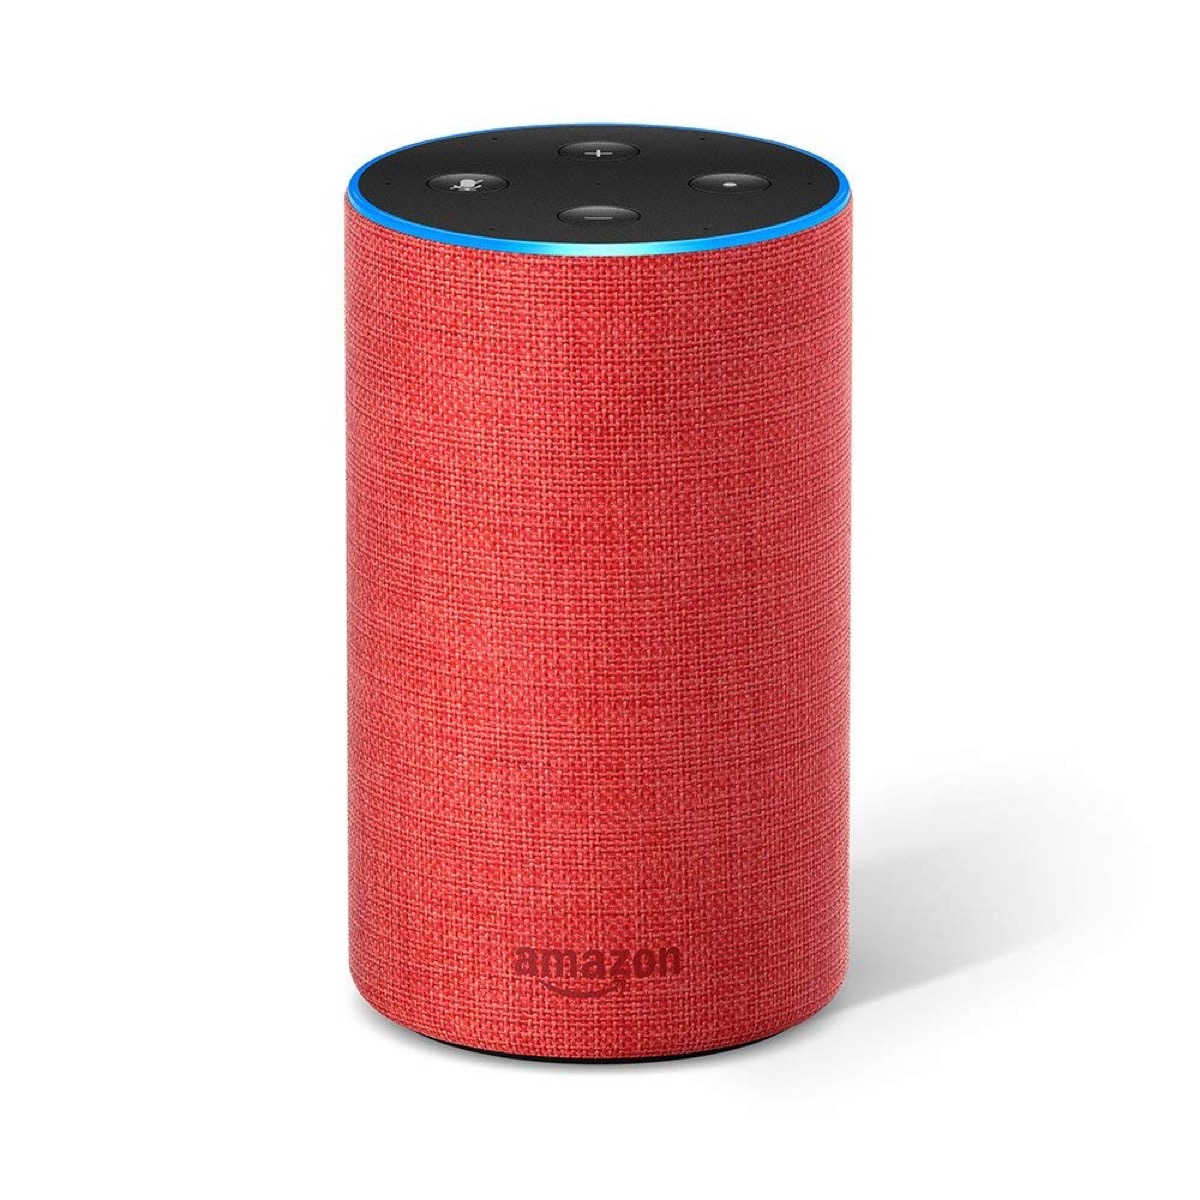 Amazon Echo popular holiday gifts